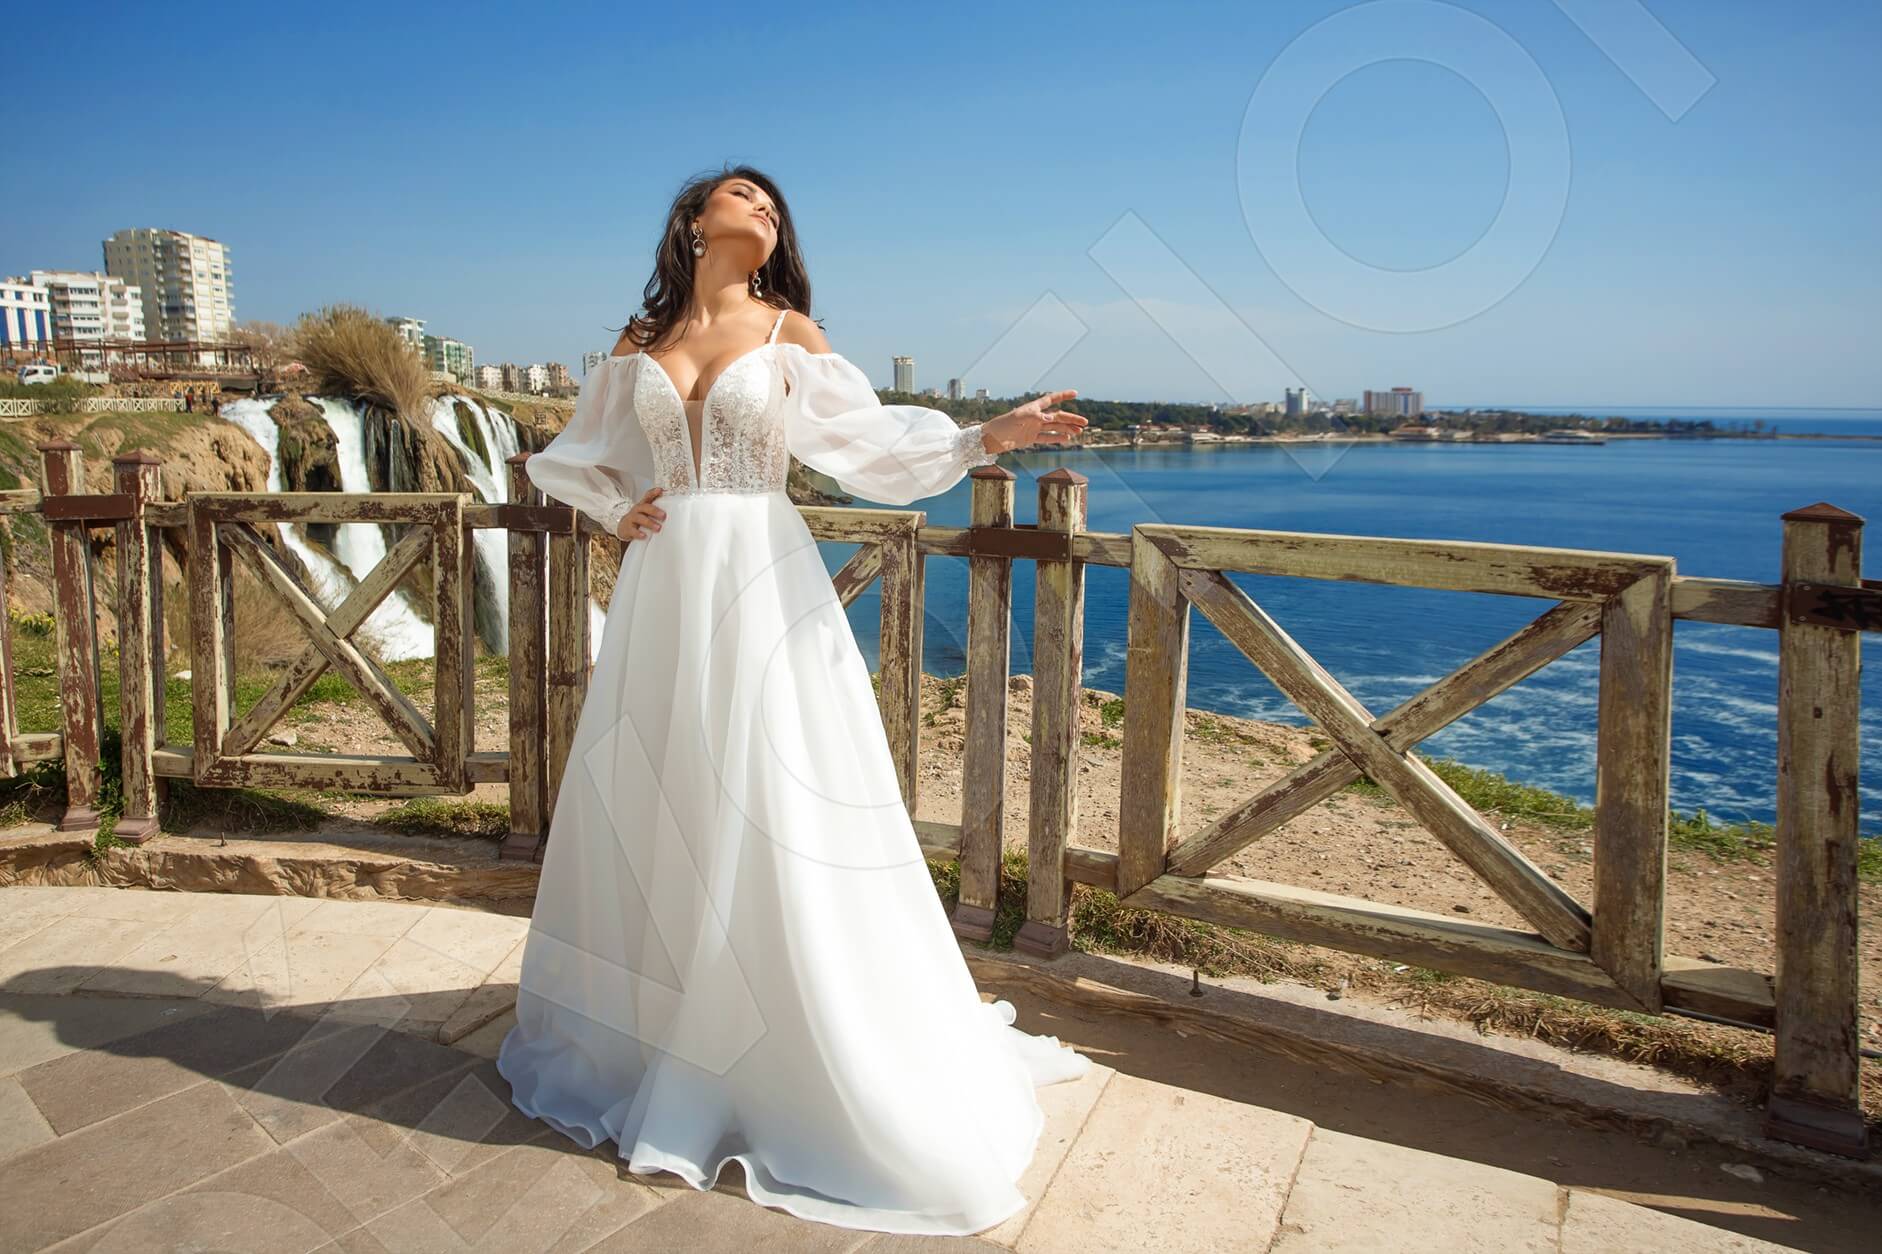 Estefania A-line Sweetheart Milk Wedding dress